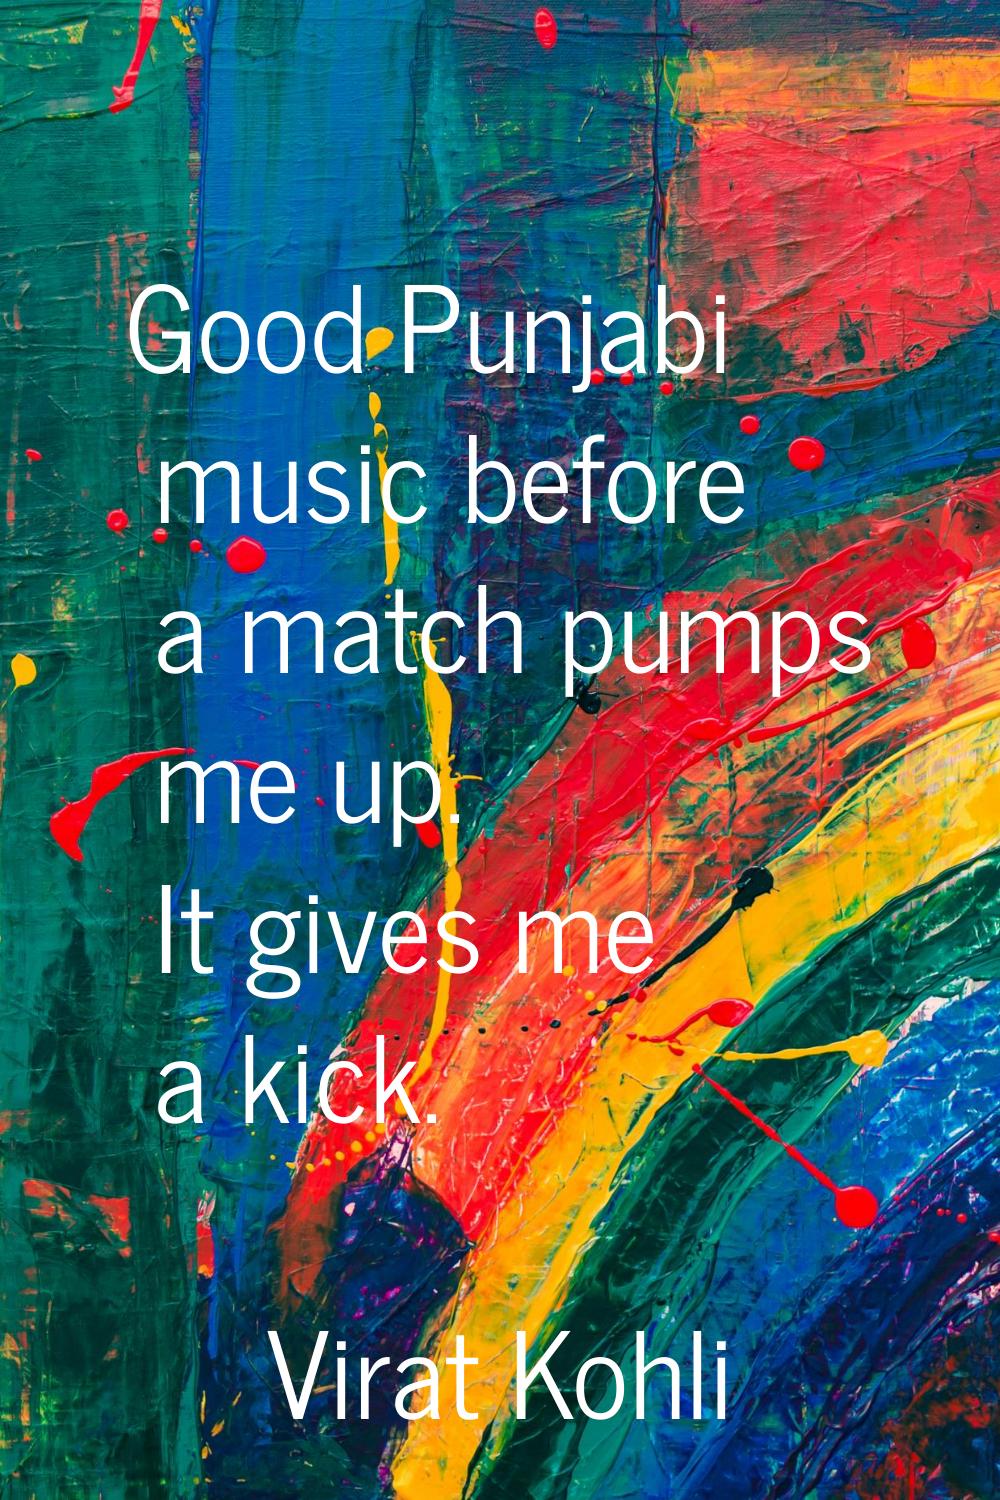 Good Punjabi music before a match pumps me up. It gives me a kick.